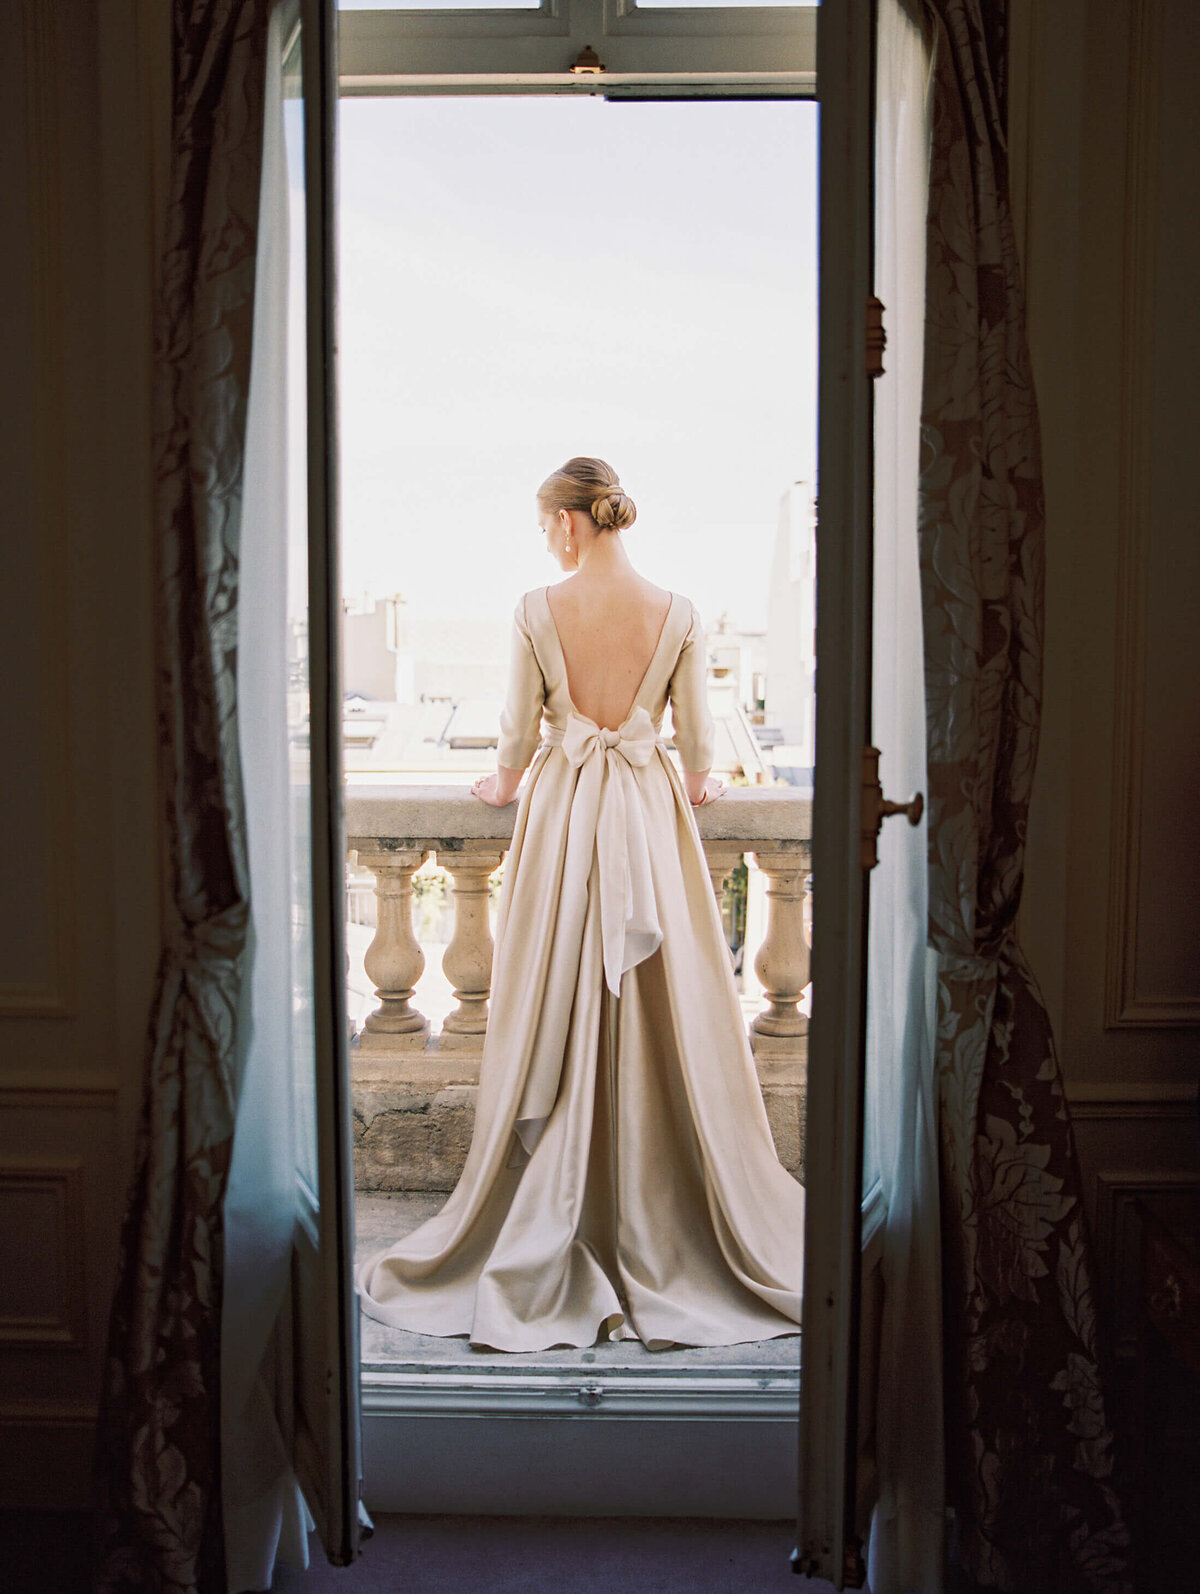 Styled shoot - Honeymoon in Paris - Kristin La Voie Photography 2017 05